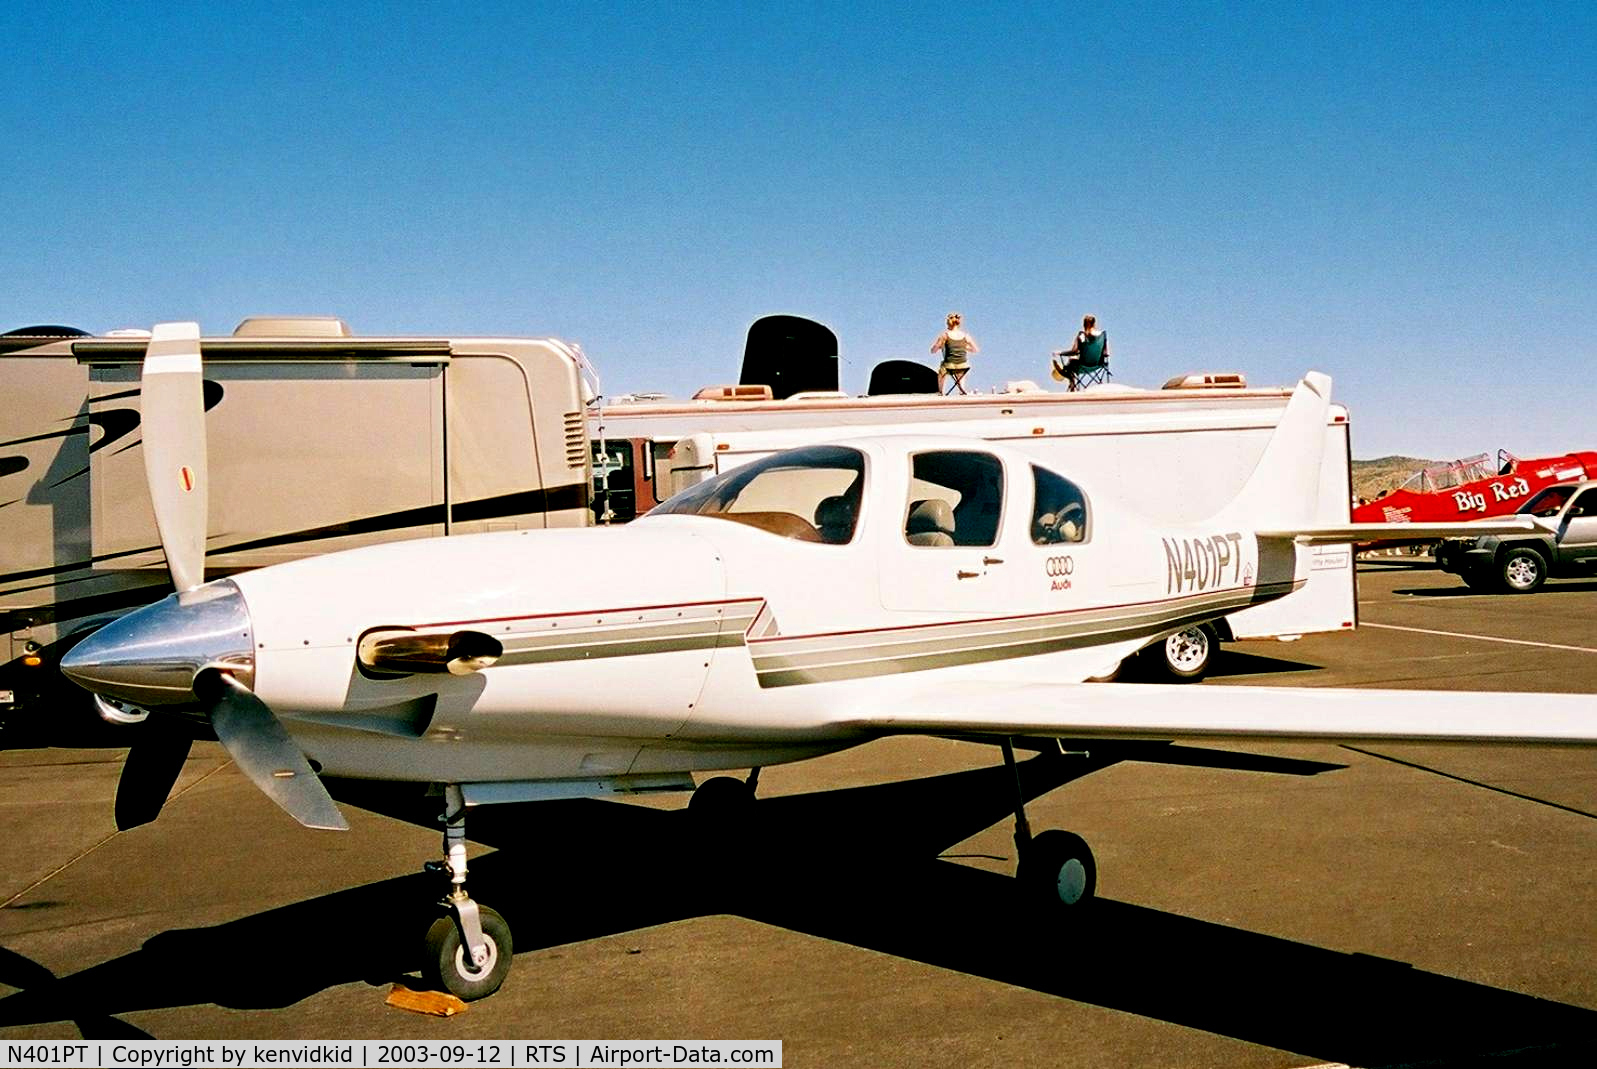 N401PT, 2002 Lancair IV-P C/N LIV-408, At the 2003 Reno Air Races.